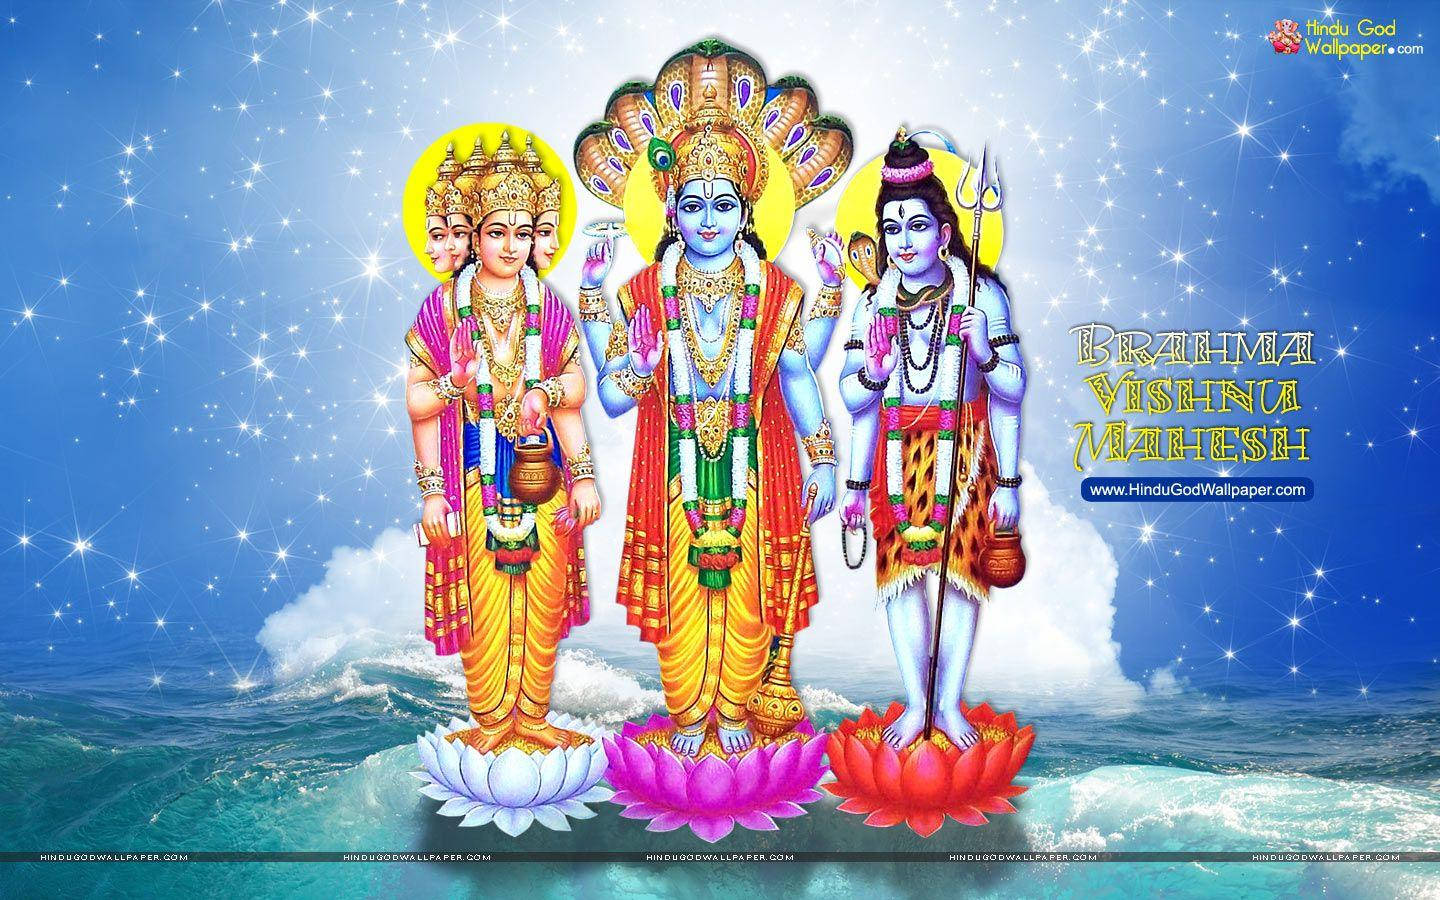 Lord Vishnu In Between Two Goddesses